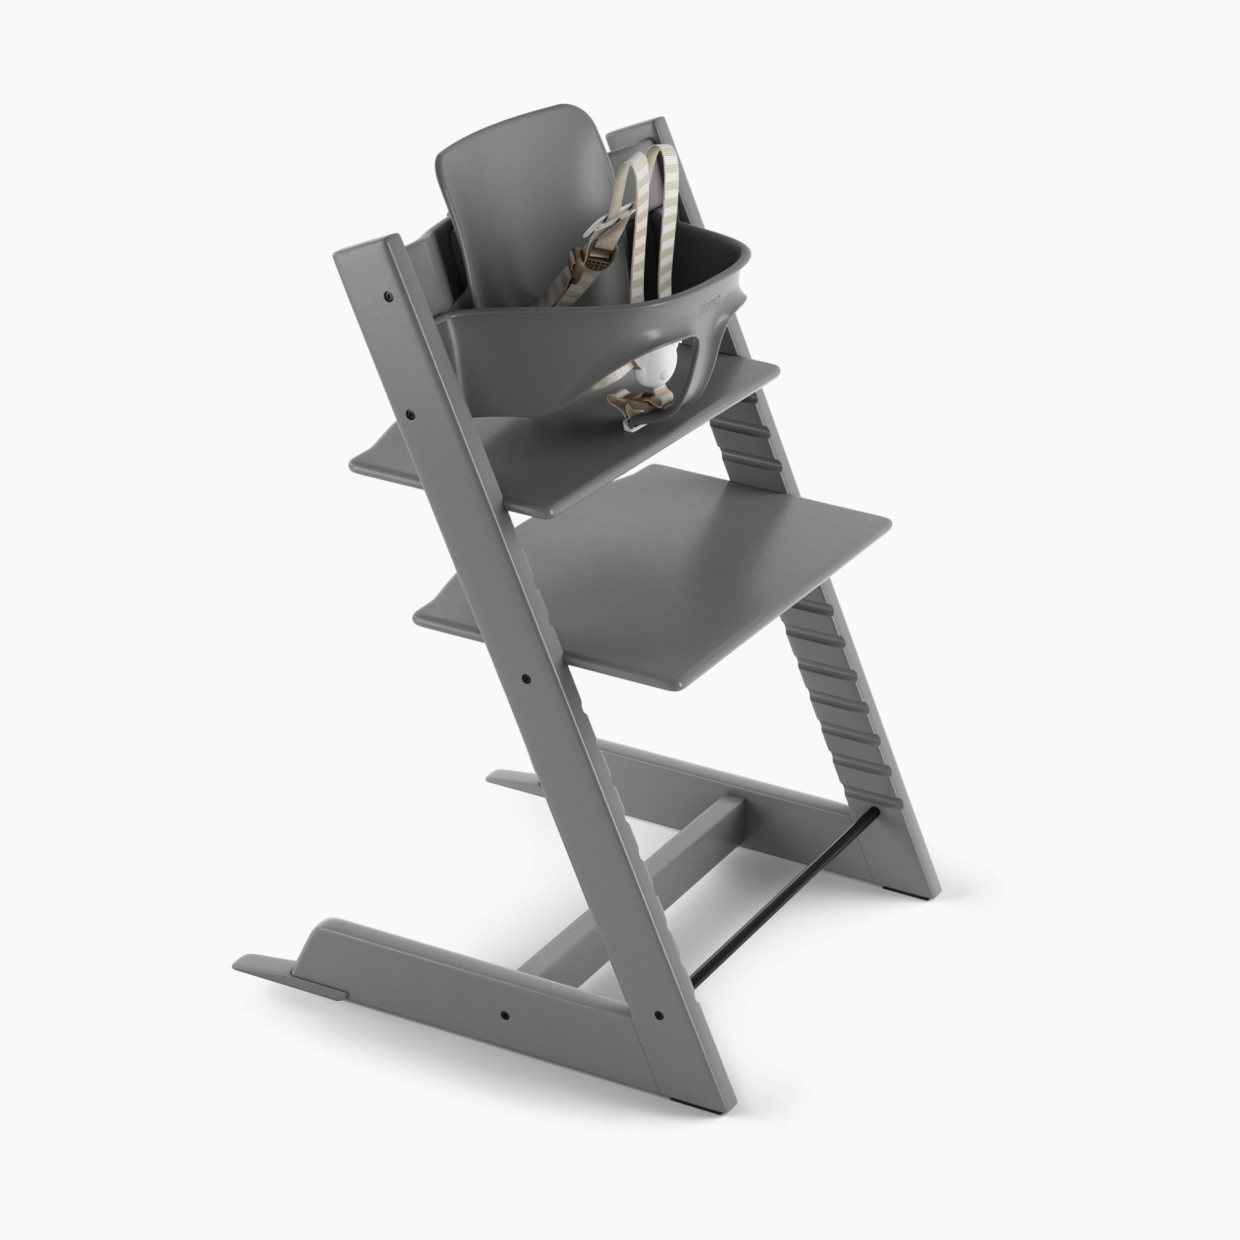 Stokke Tripp Trapp High Chair - Storm Grey.